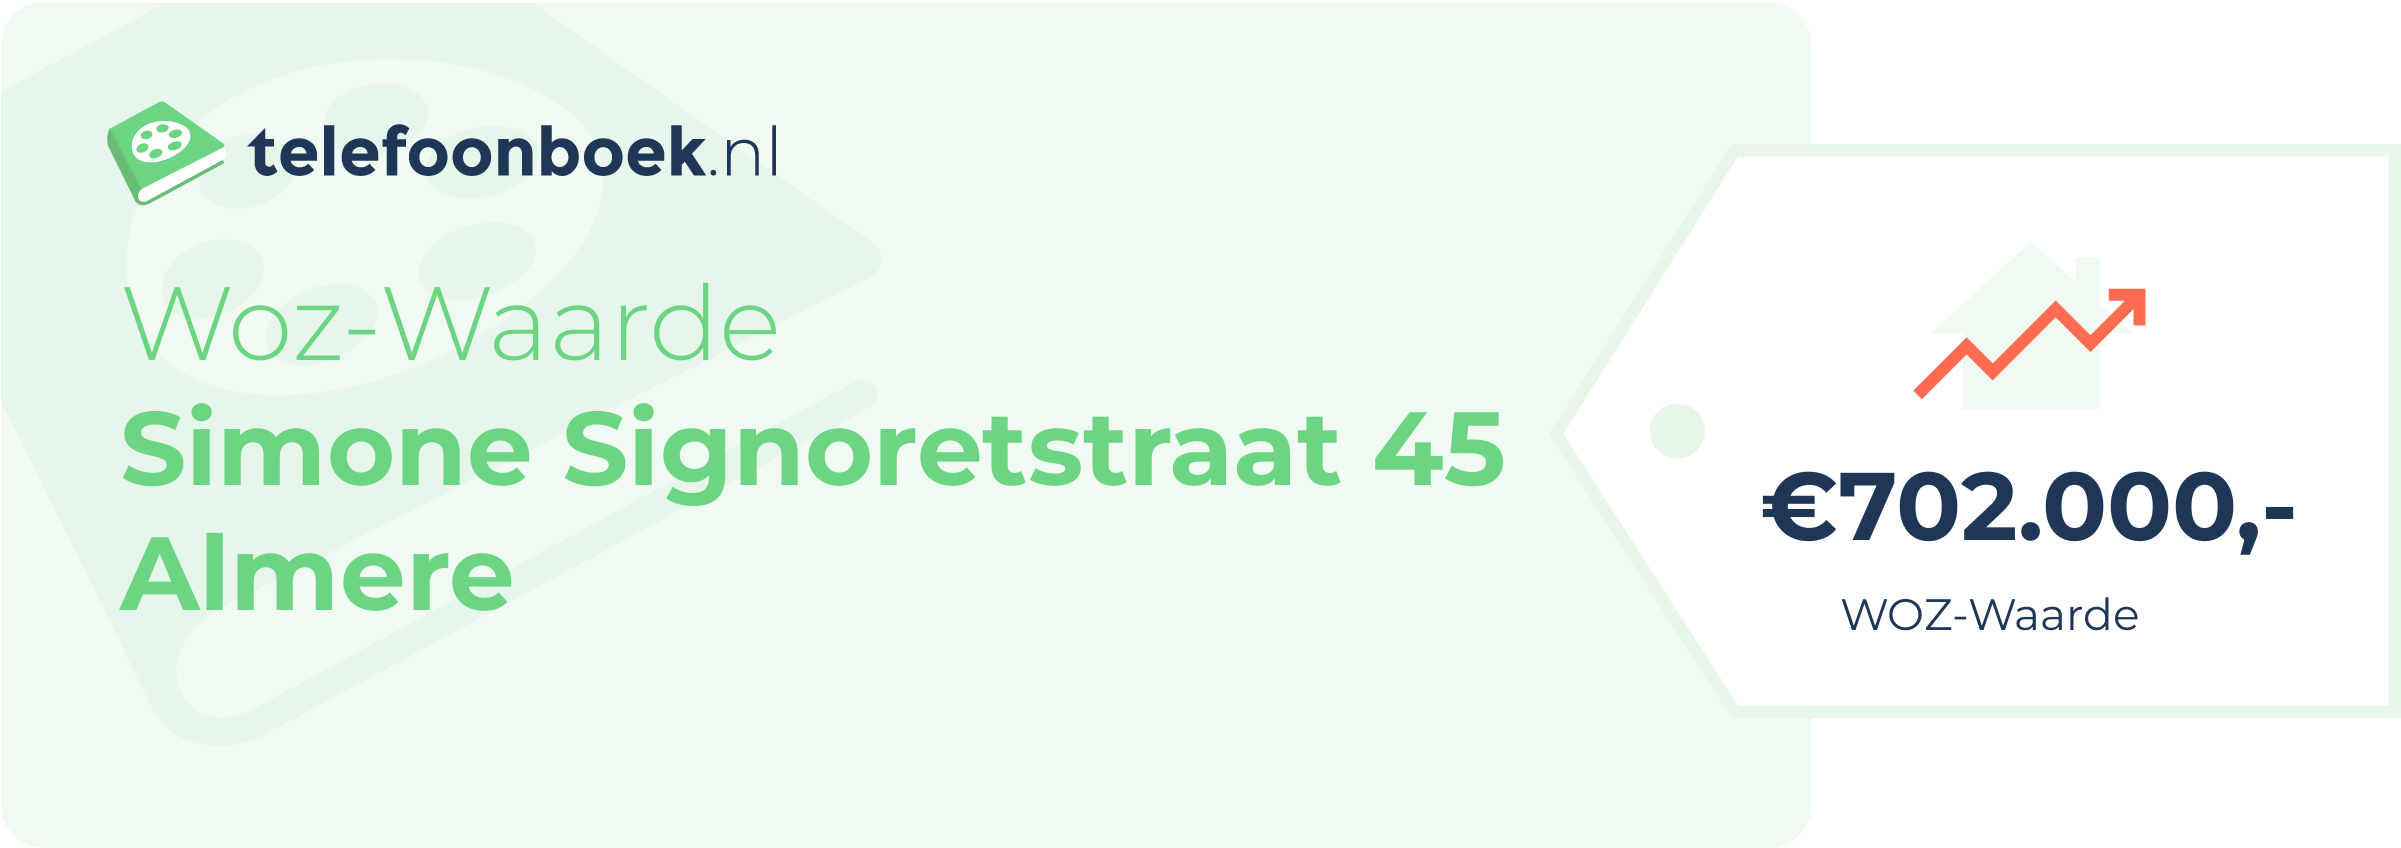 WOZ-waarde Simone Signoretstraat 45 Almere